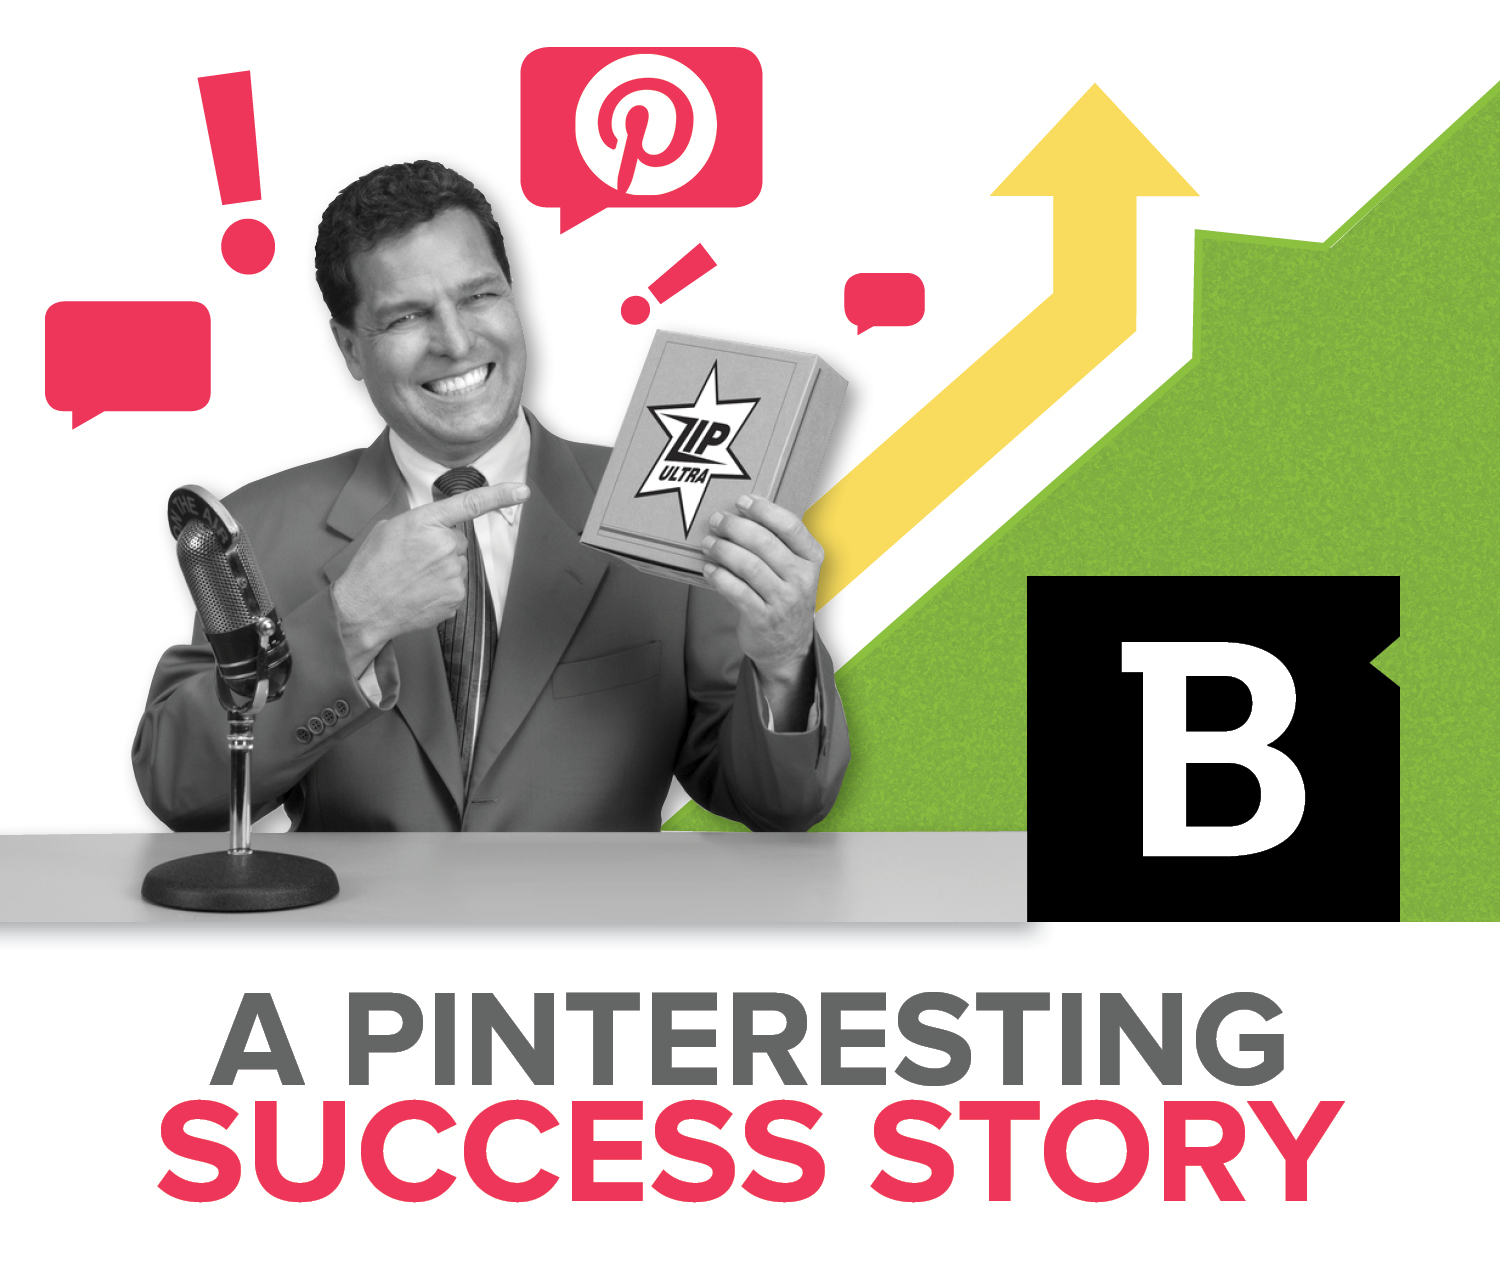 One Brafton client proves how Pinterest marketing drives success.